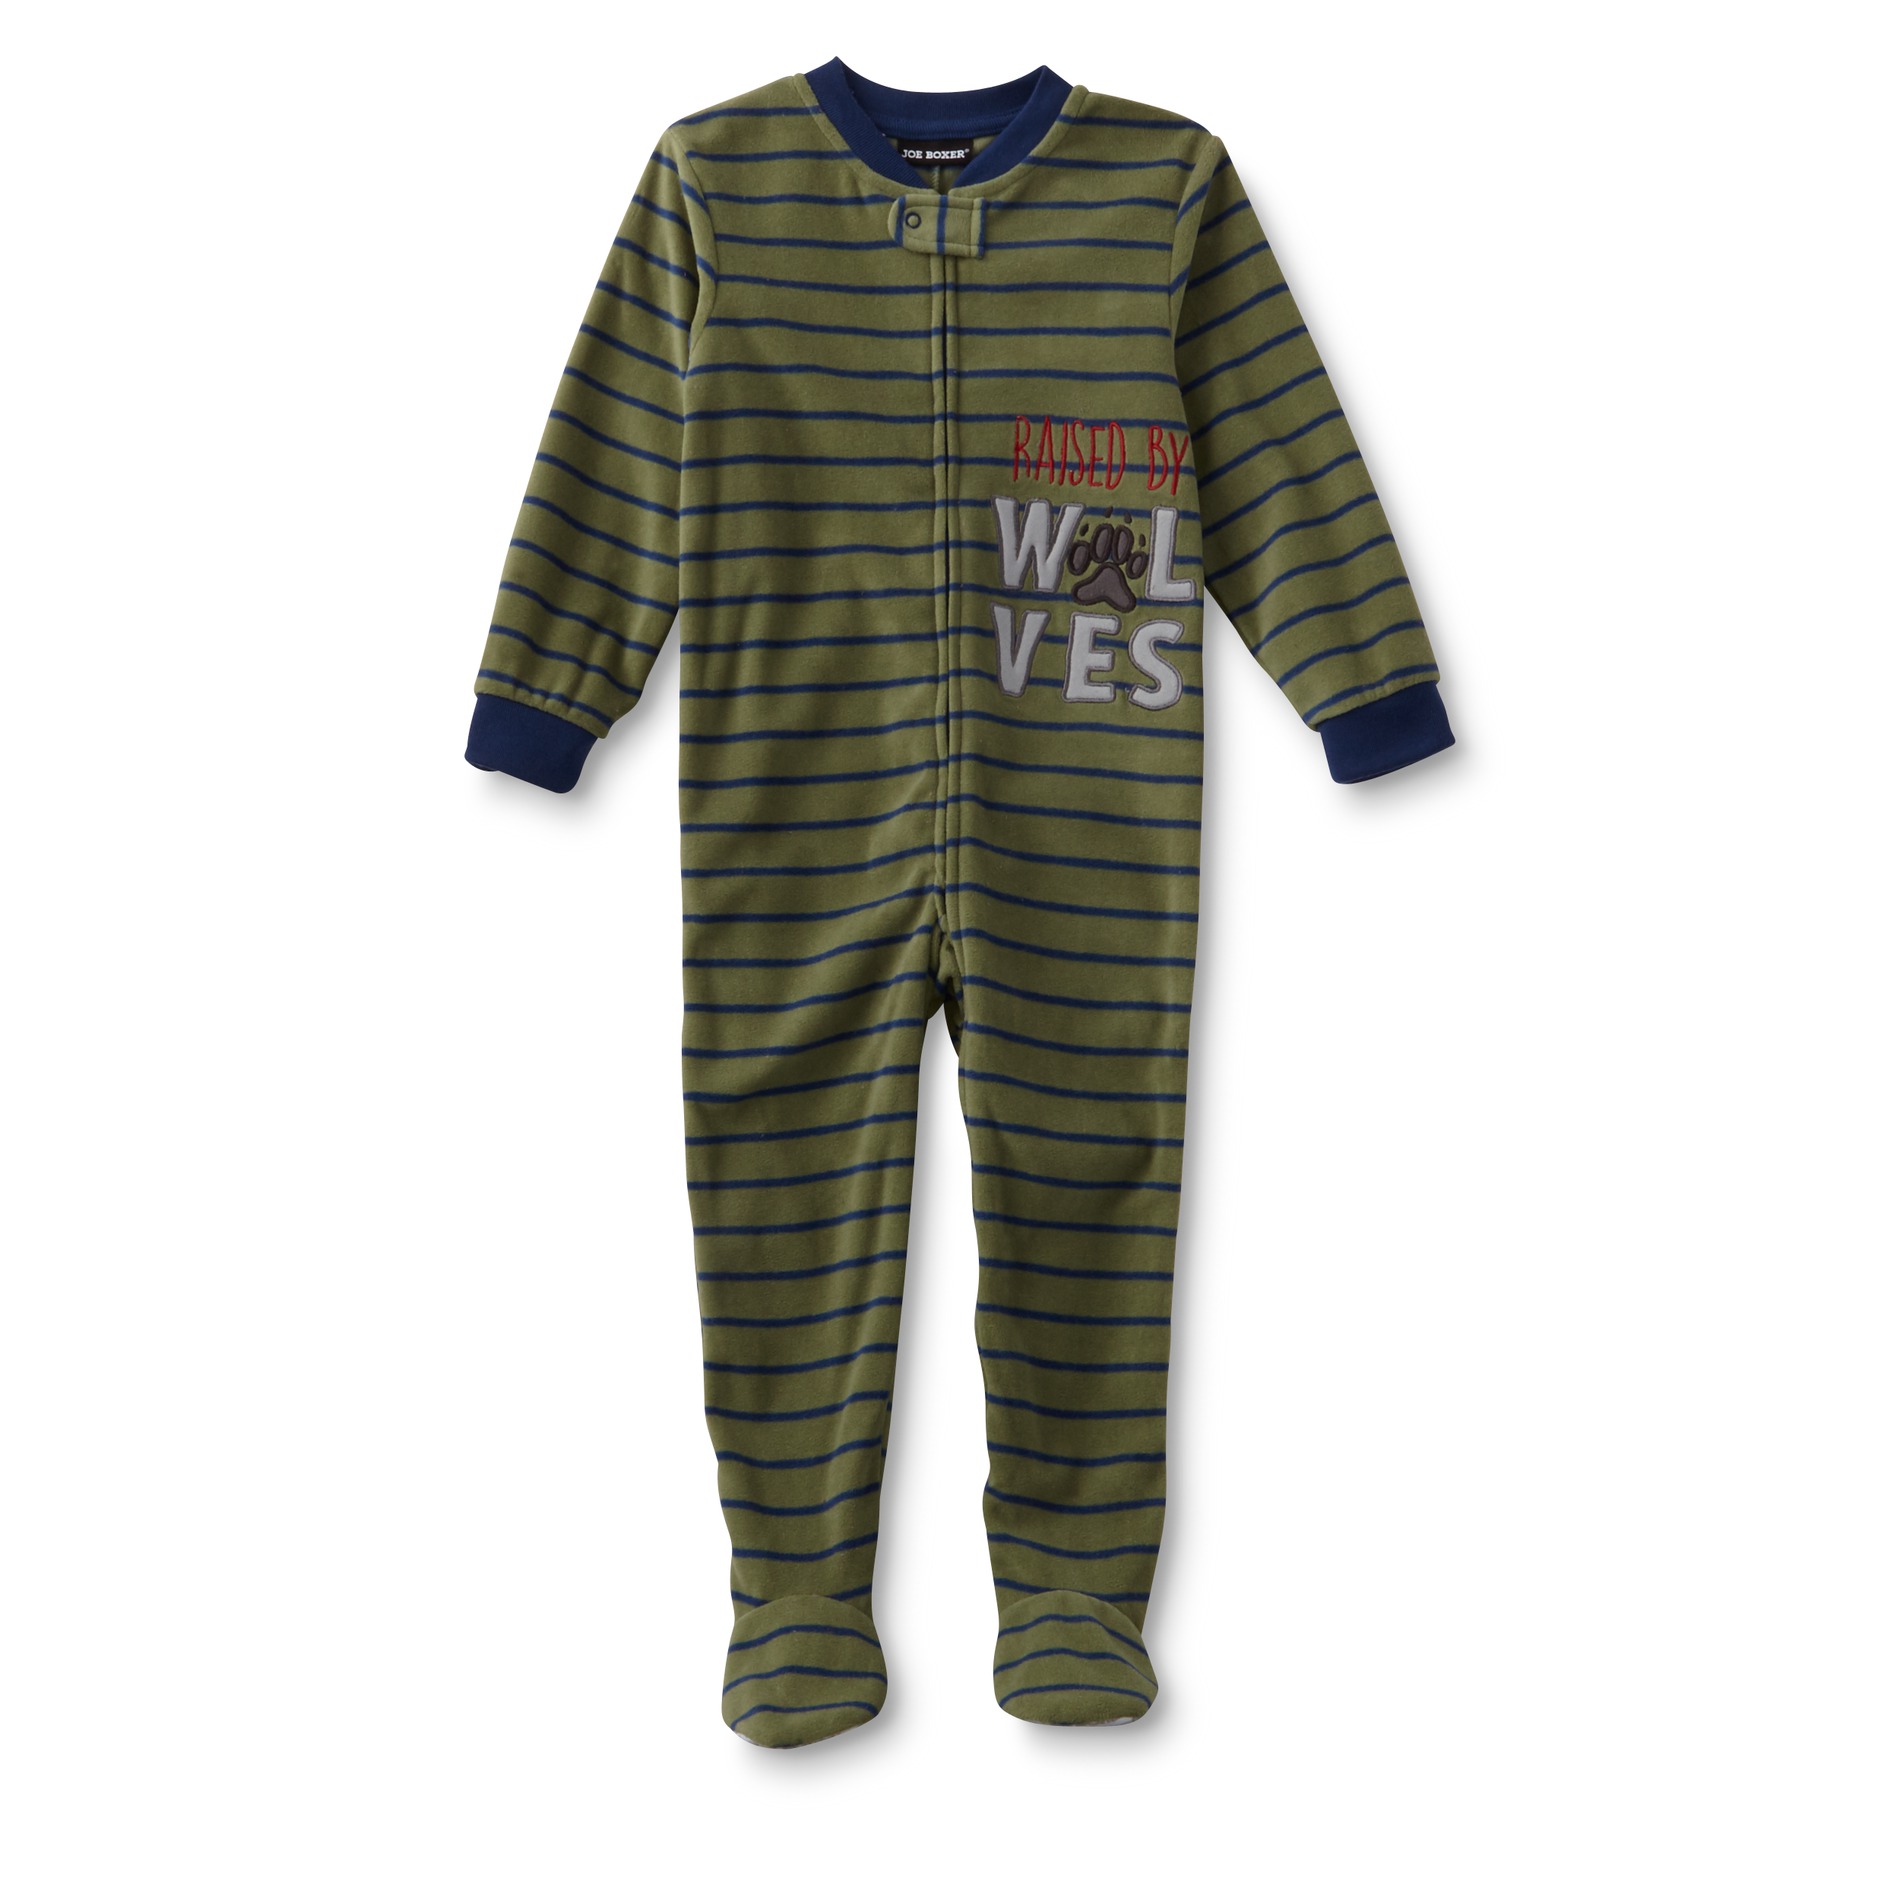 Joe Boxer Infant & Toddler Boy's Sleeper Pajamas - Striped